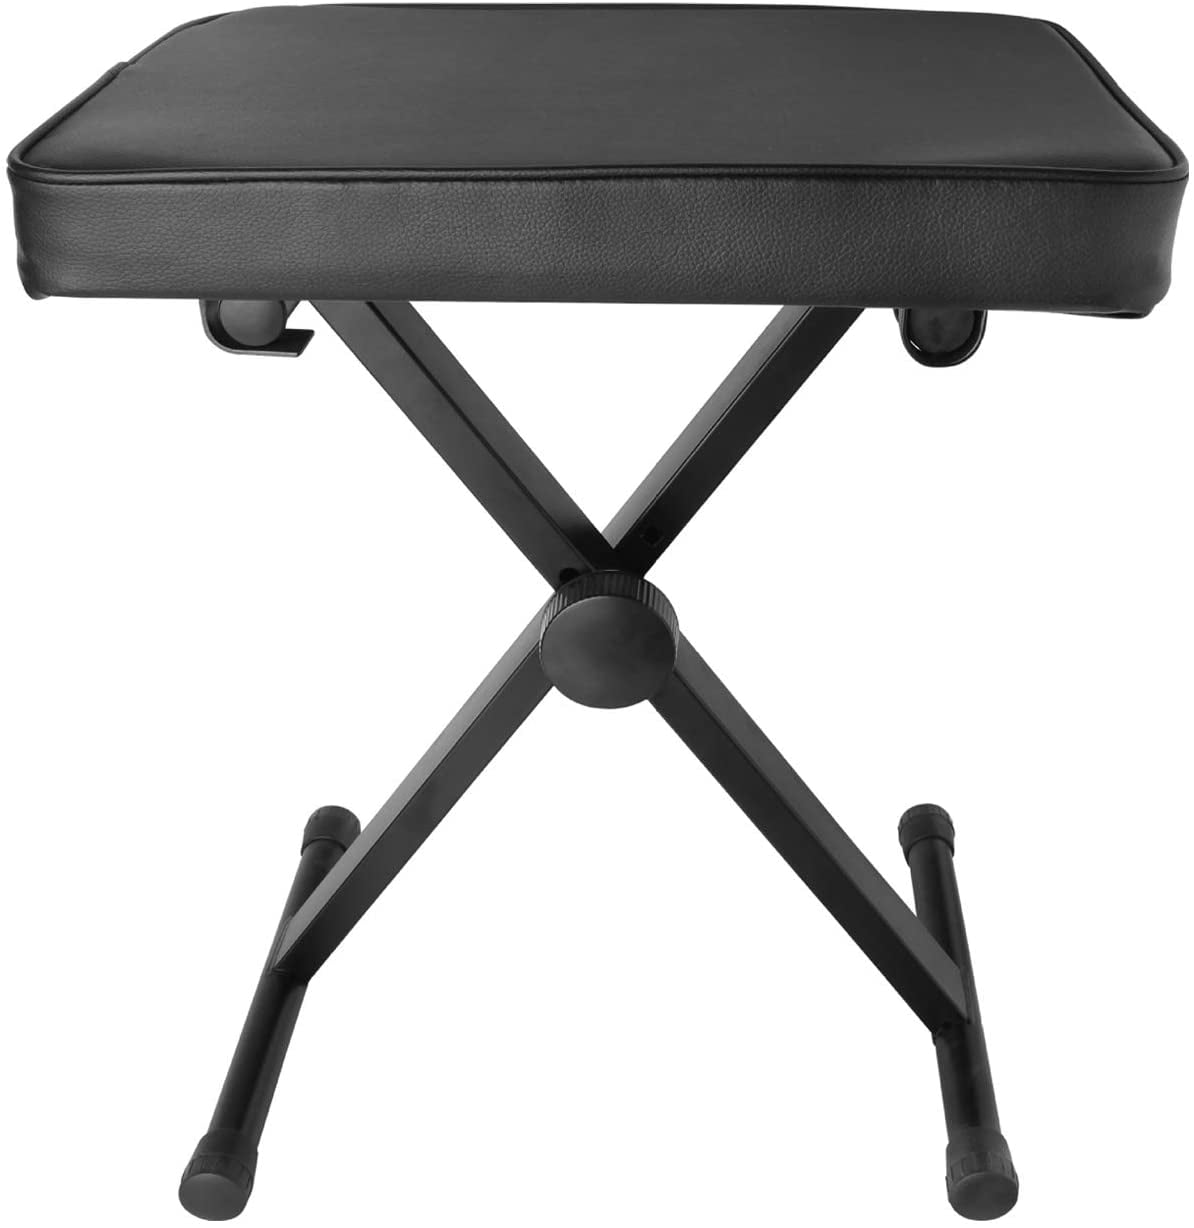 WUIIEN Piano Bench Adjustable Piano Keyboard Chair Padded Seat Rubber Feet Steel Stoo 